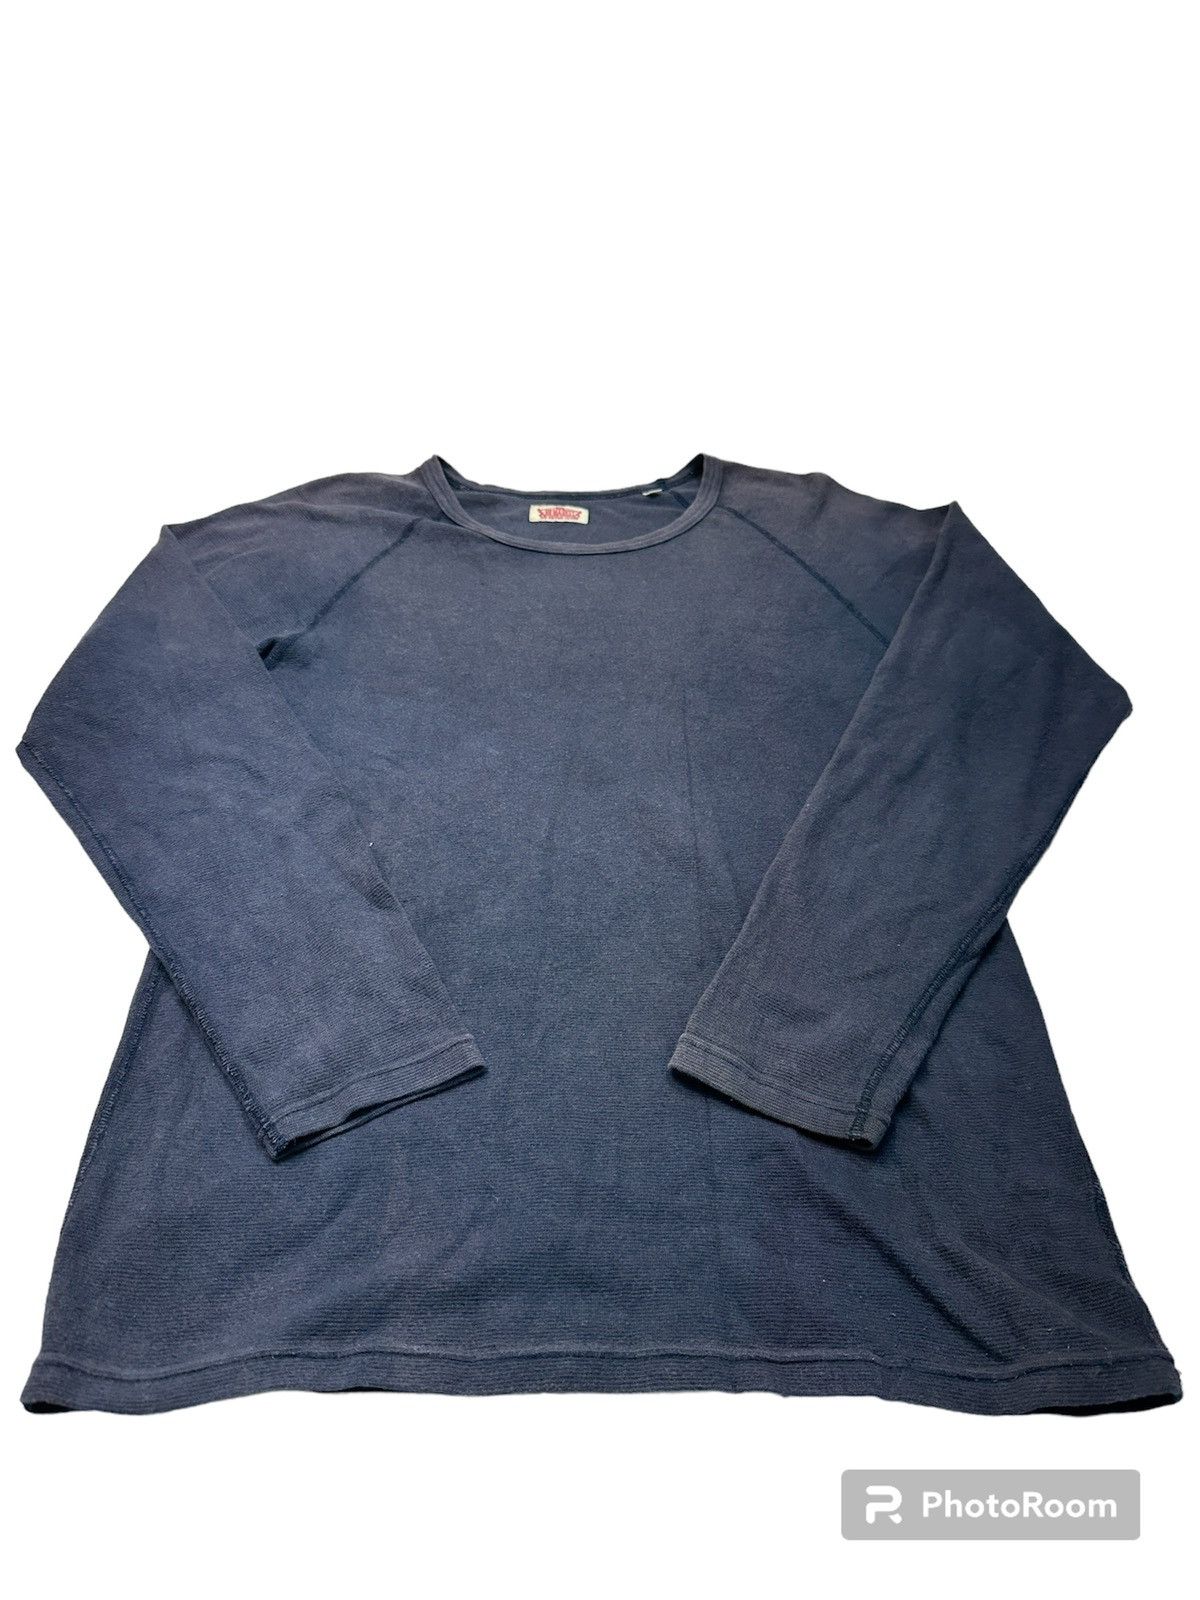 Vintage HR Market plain long sleeve tee shirt Size US S / EU 44-46 / 1 - 2 Preview